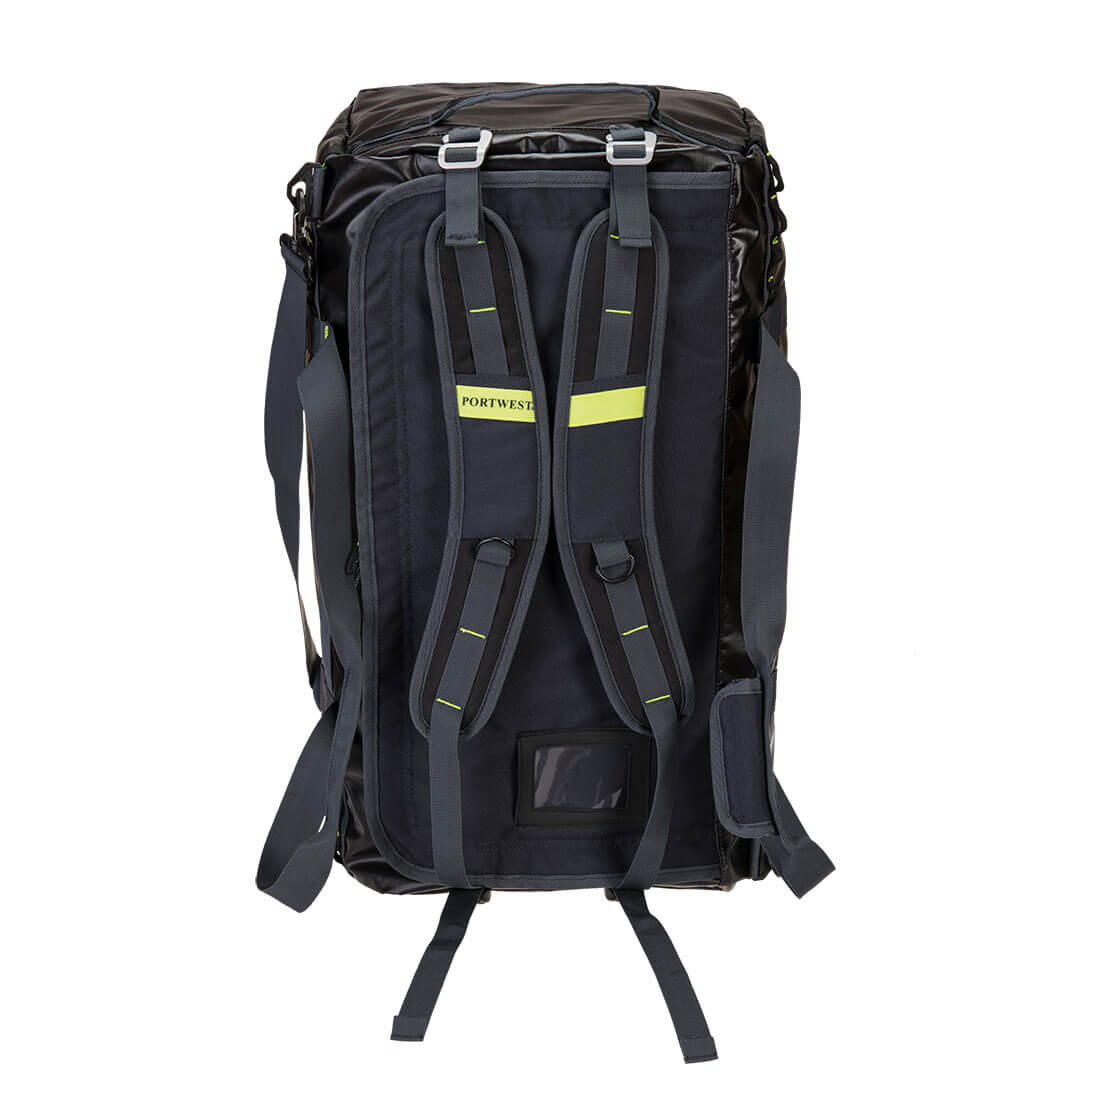 B950 Portwest® Black Water-Resistant Duffle Bags